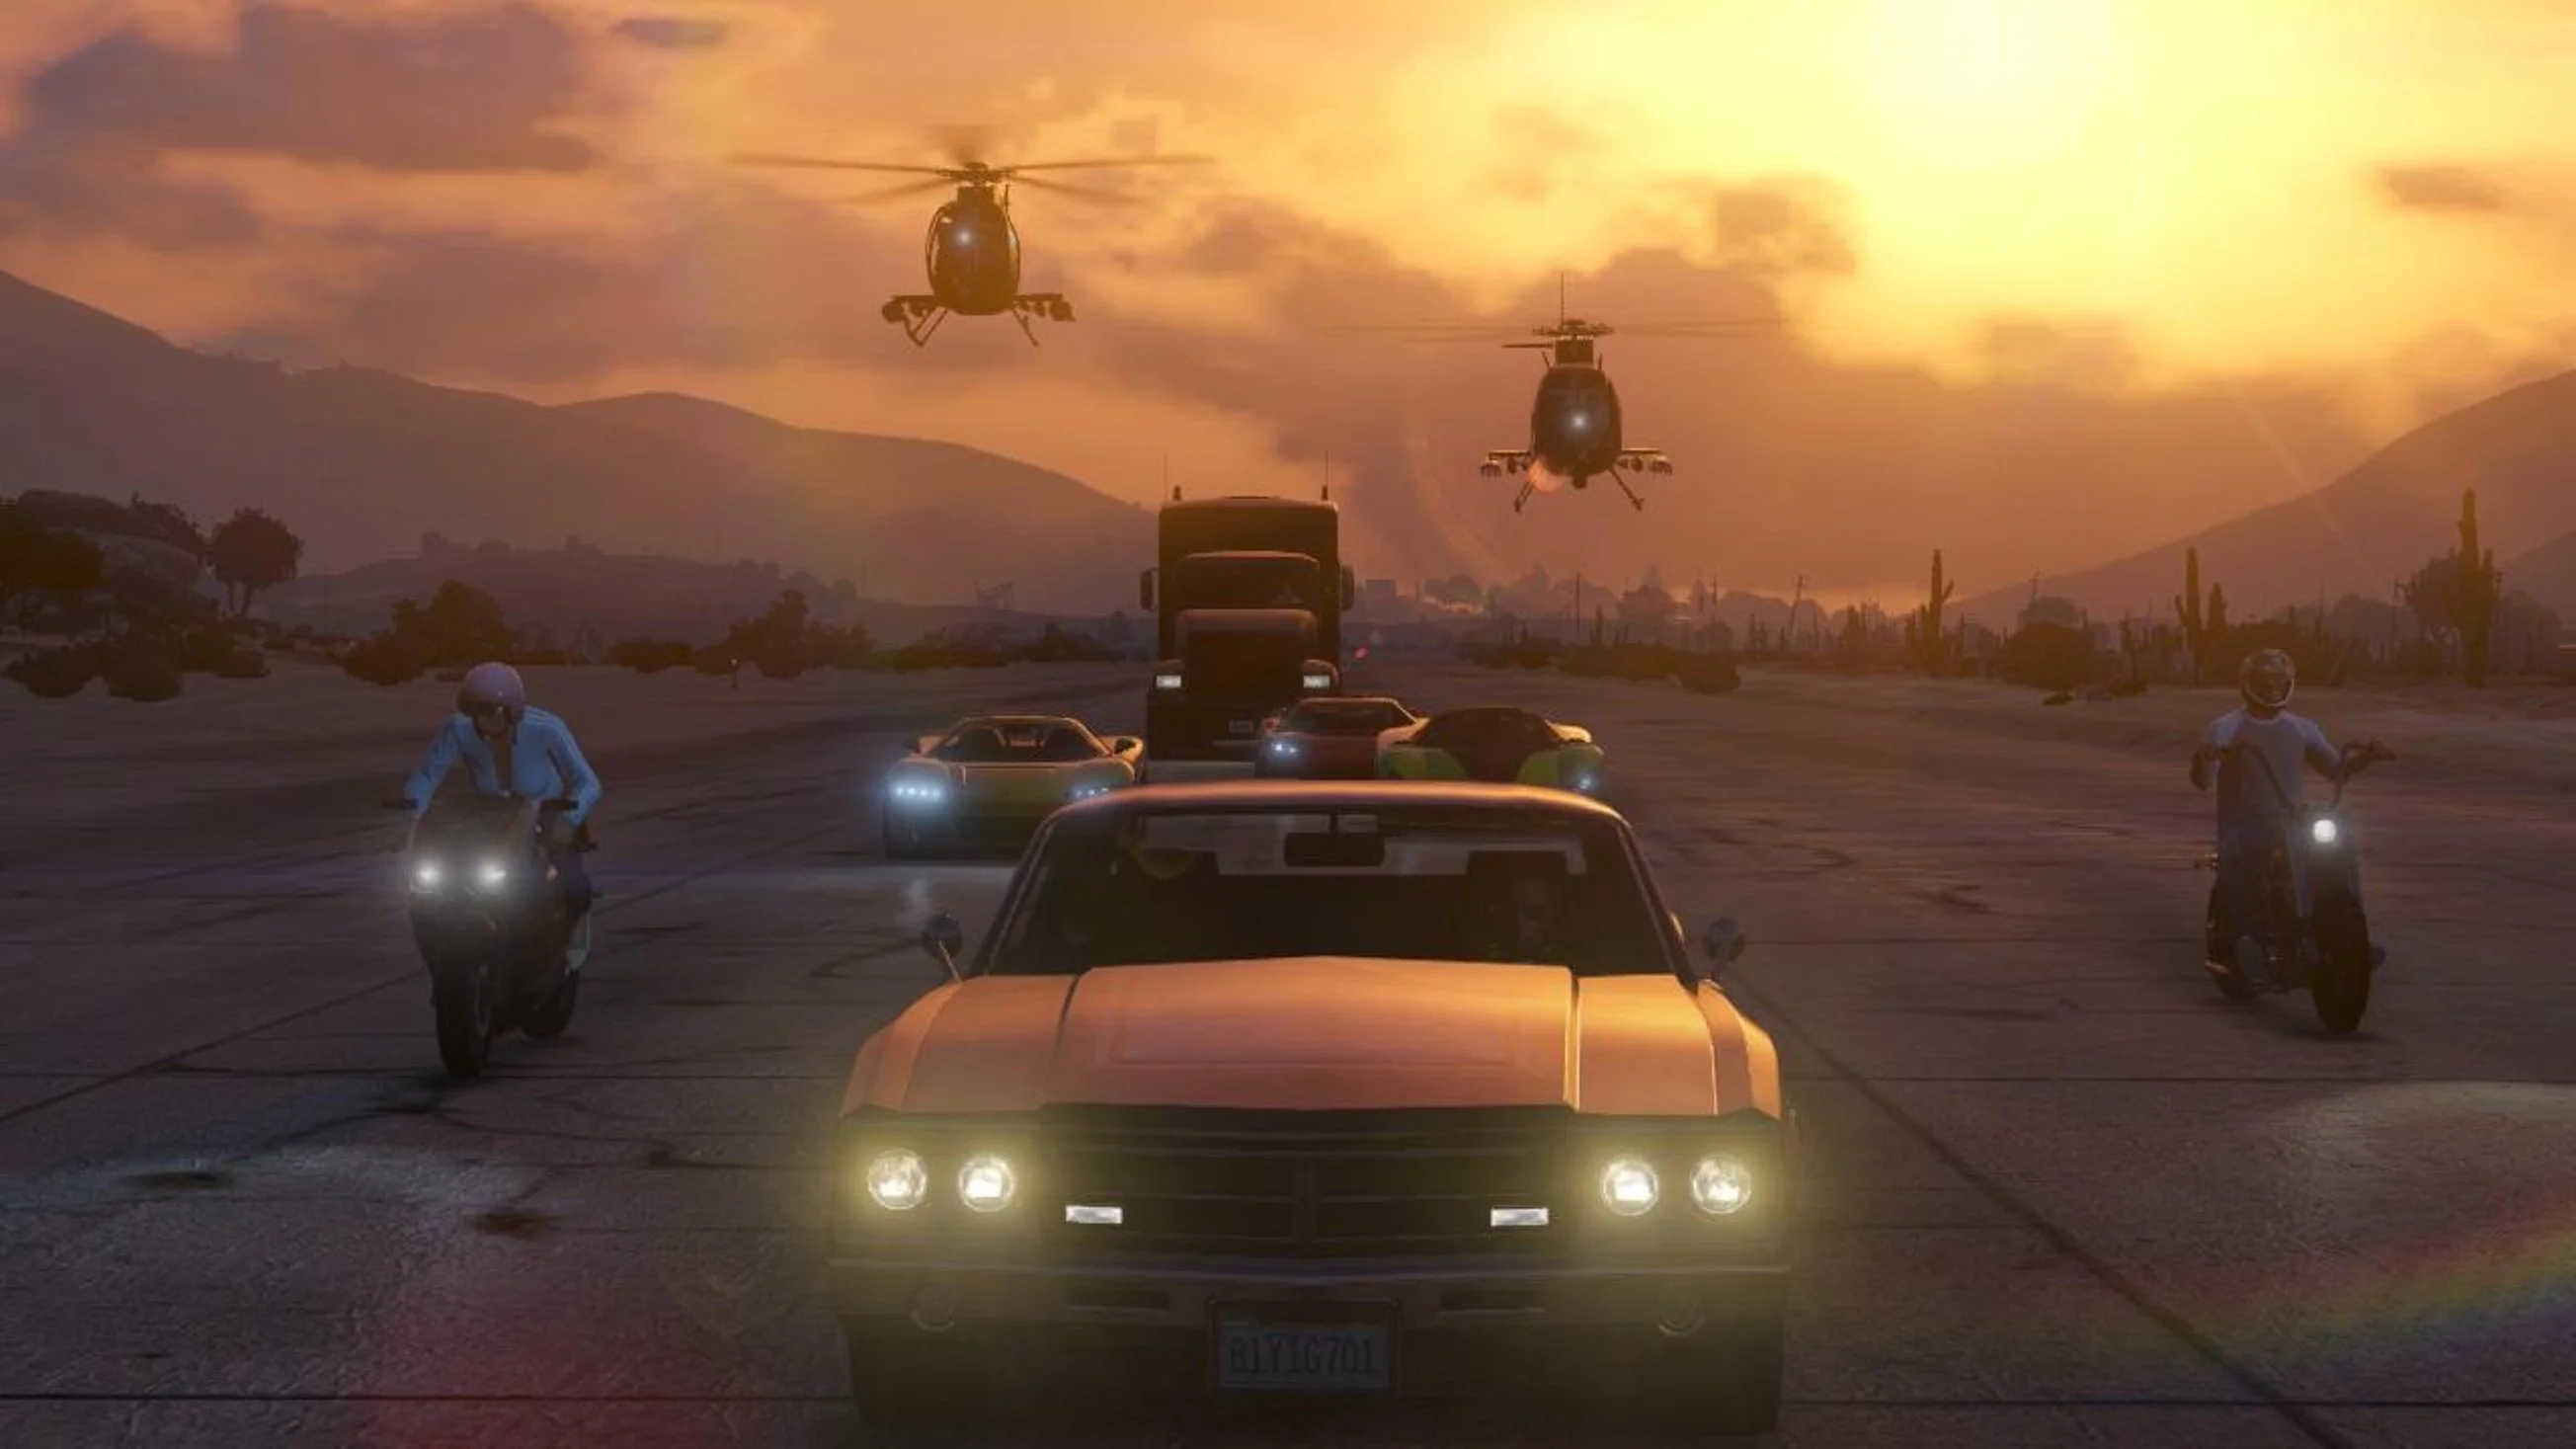 Игроки обсуждают, насколько в GTA VI будет уместен реализм, как в Red Dead Redemption 2 - фото 1